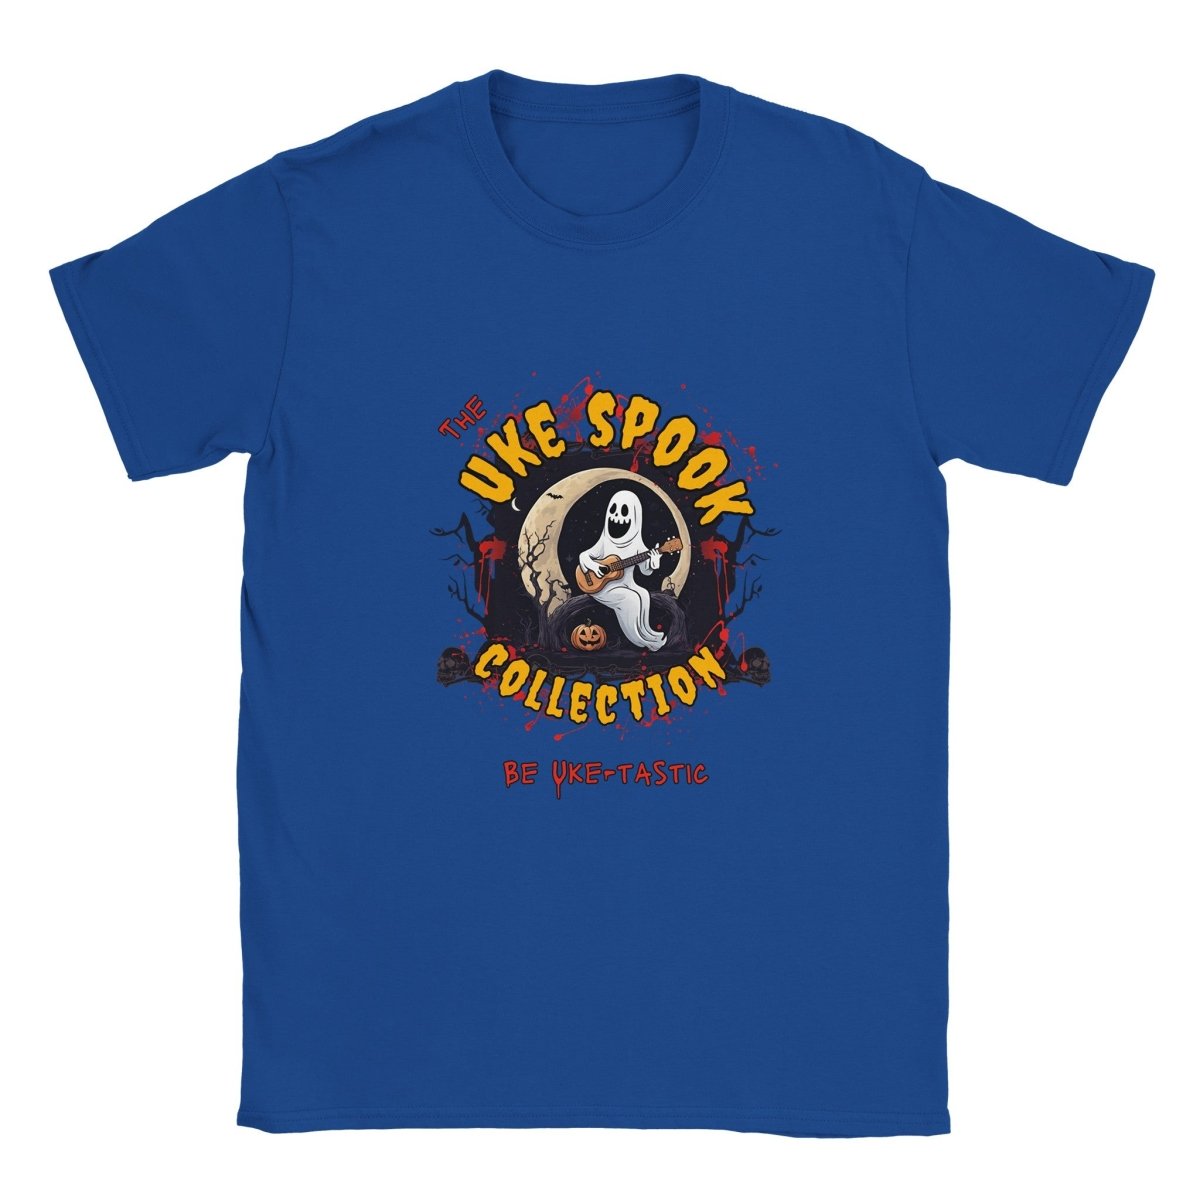 Uke Spook Ghost - Classic Unisex Crewneck T-shirt - Uke Tastic - Royal - Free Delivery - Uke Tastic